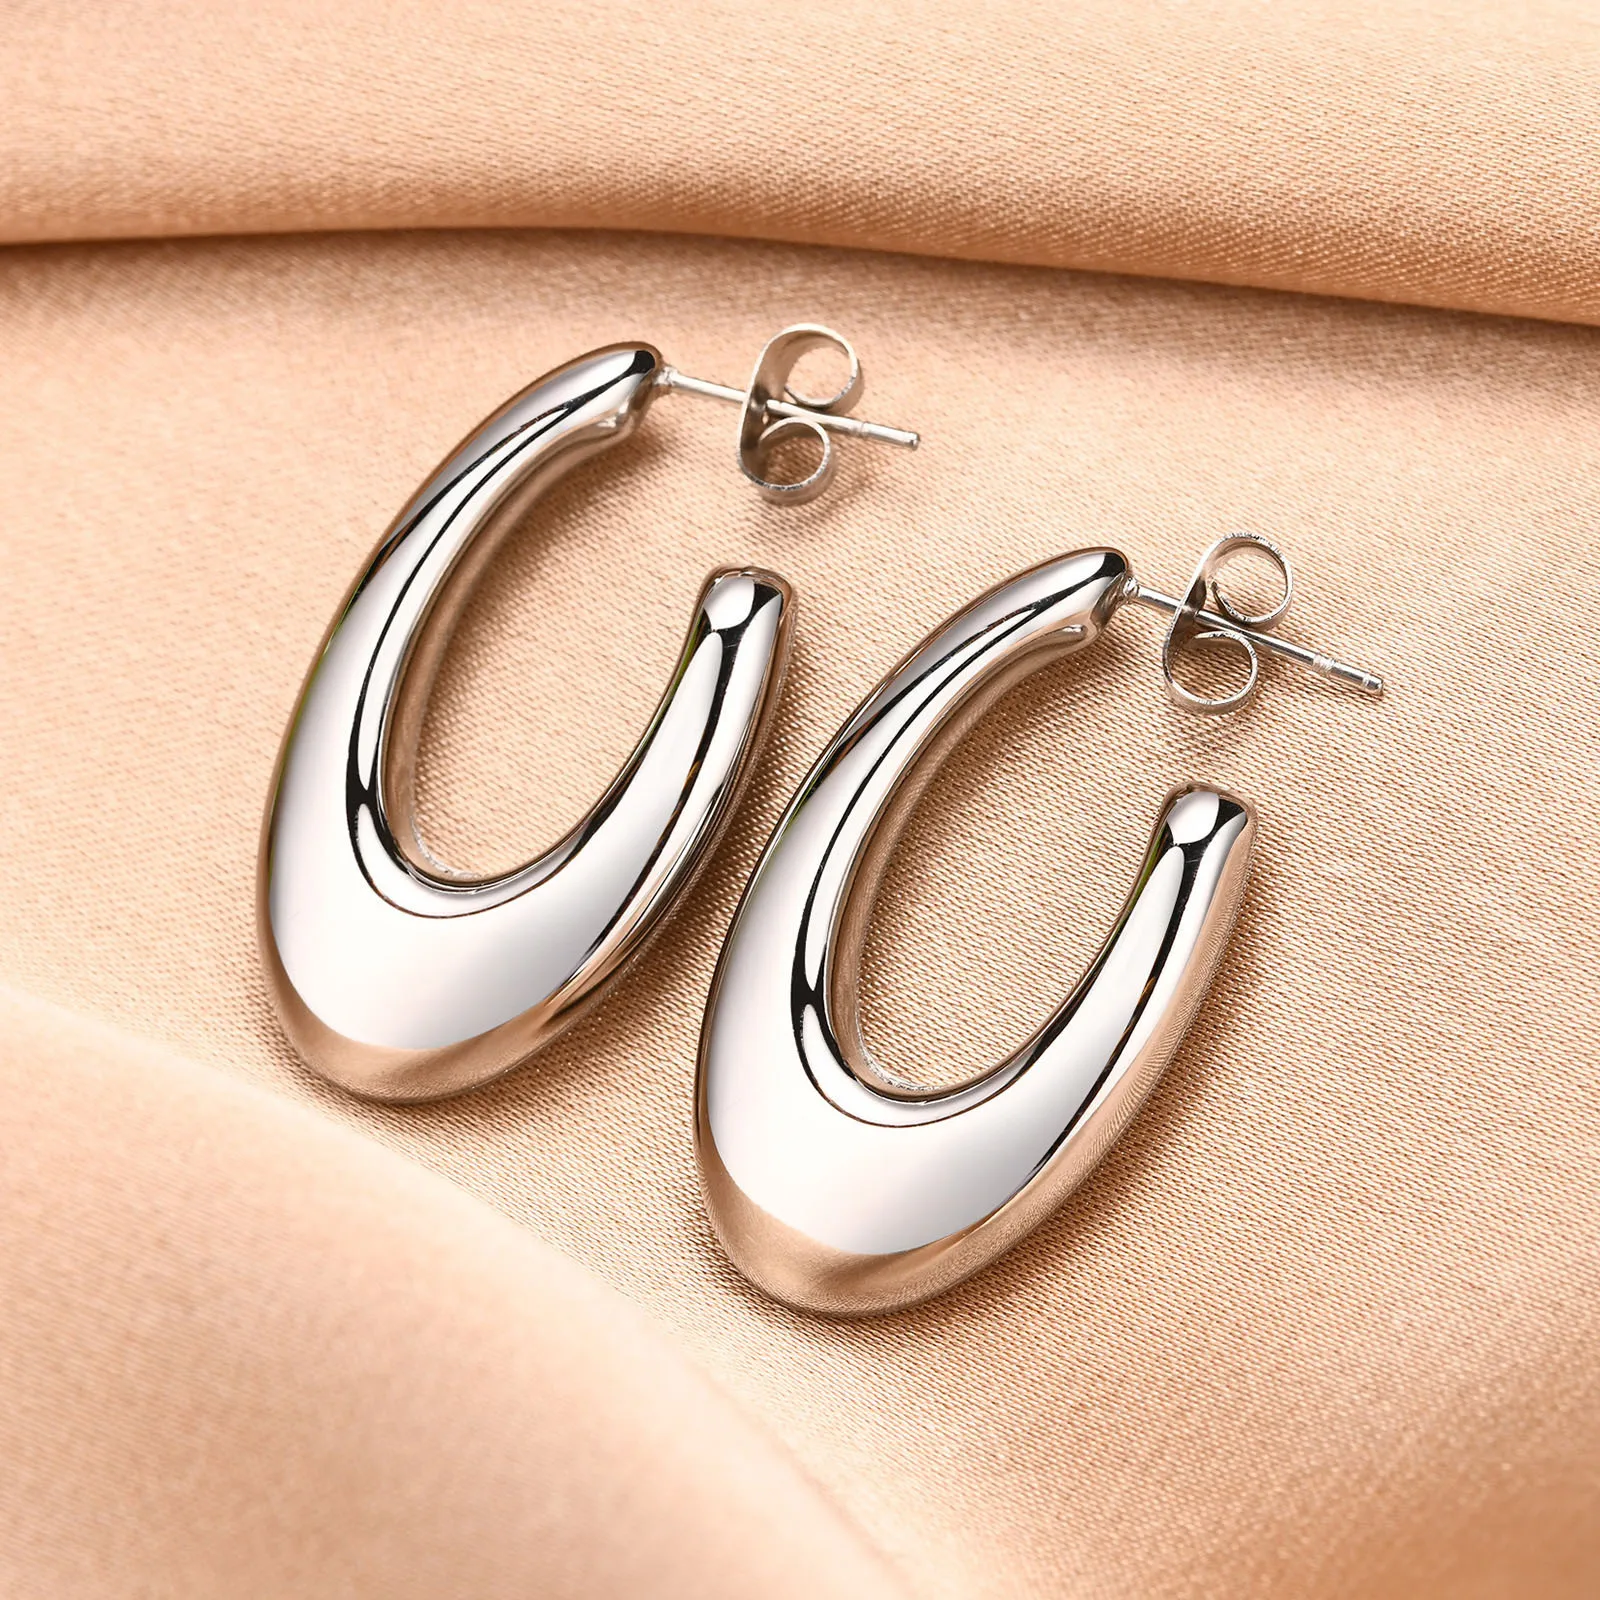 

Classic Simple Stainless Steel Gold Plating Water Drop Stud Earrings High Polished Stainless Steel Oval Shape Hoop Earrings